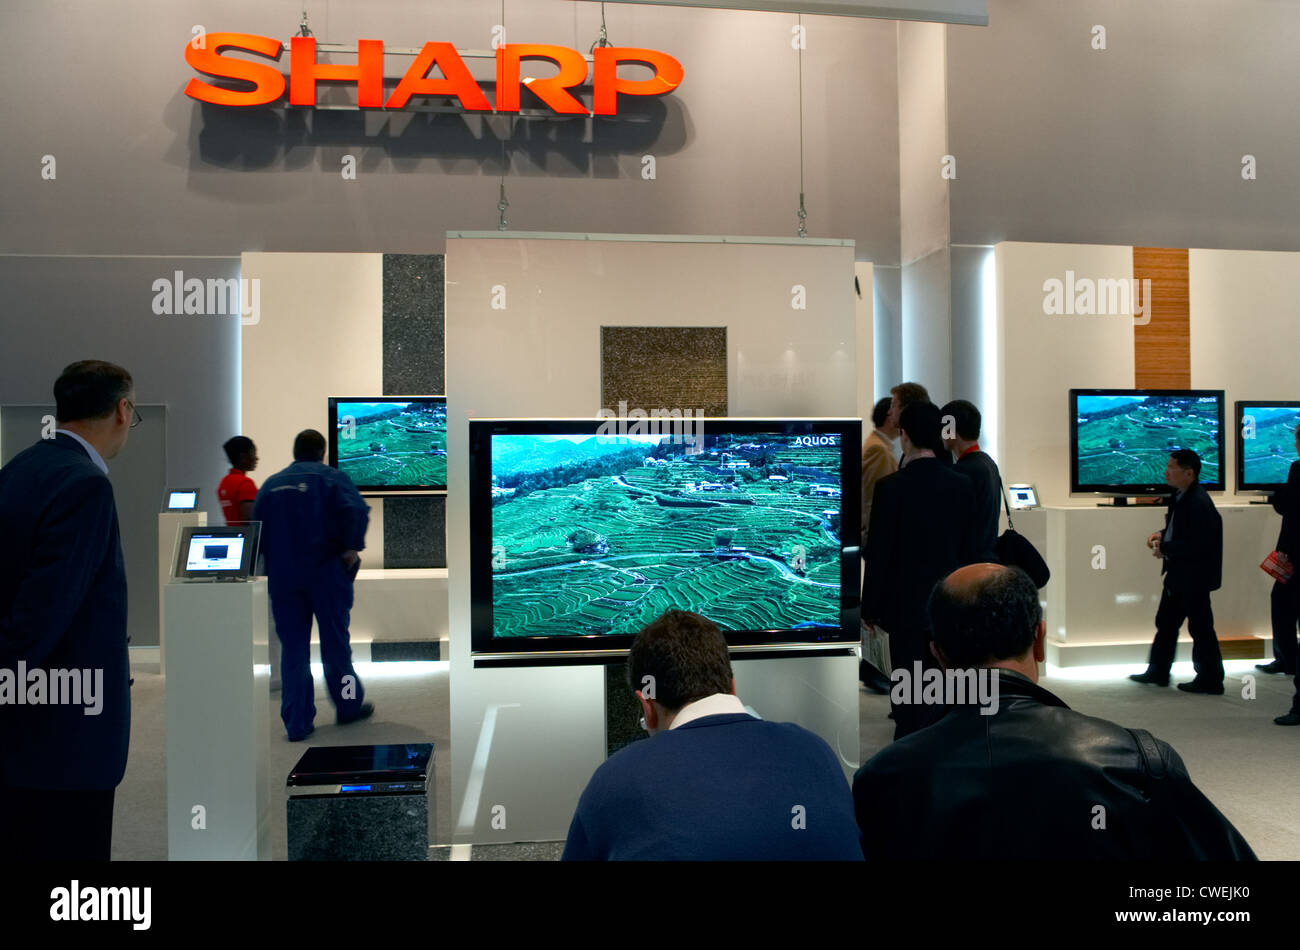 Flat type of japan-based company Sharp Aquos Stock Photo